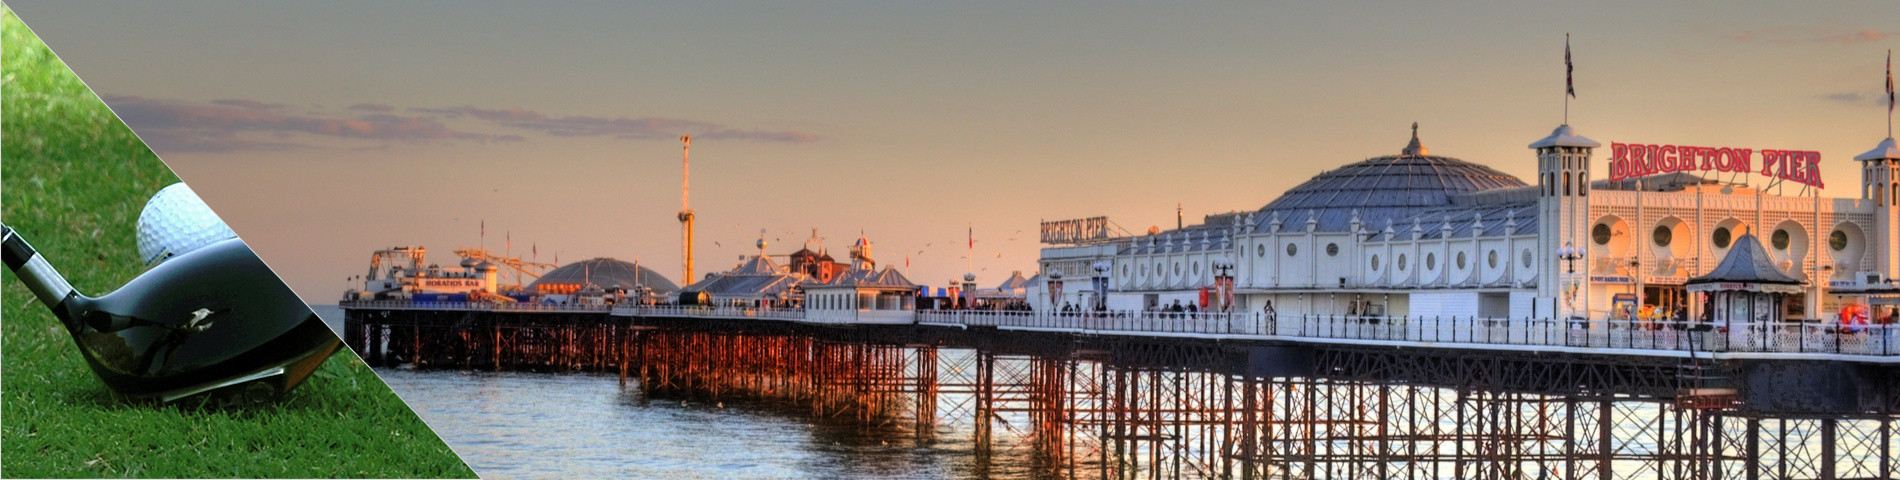 Brighton - Angličtina a Golf